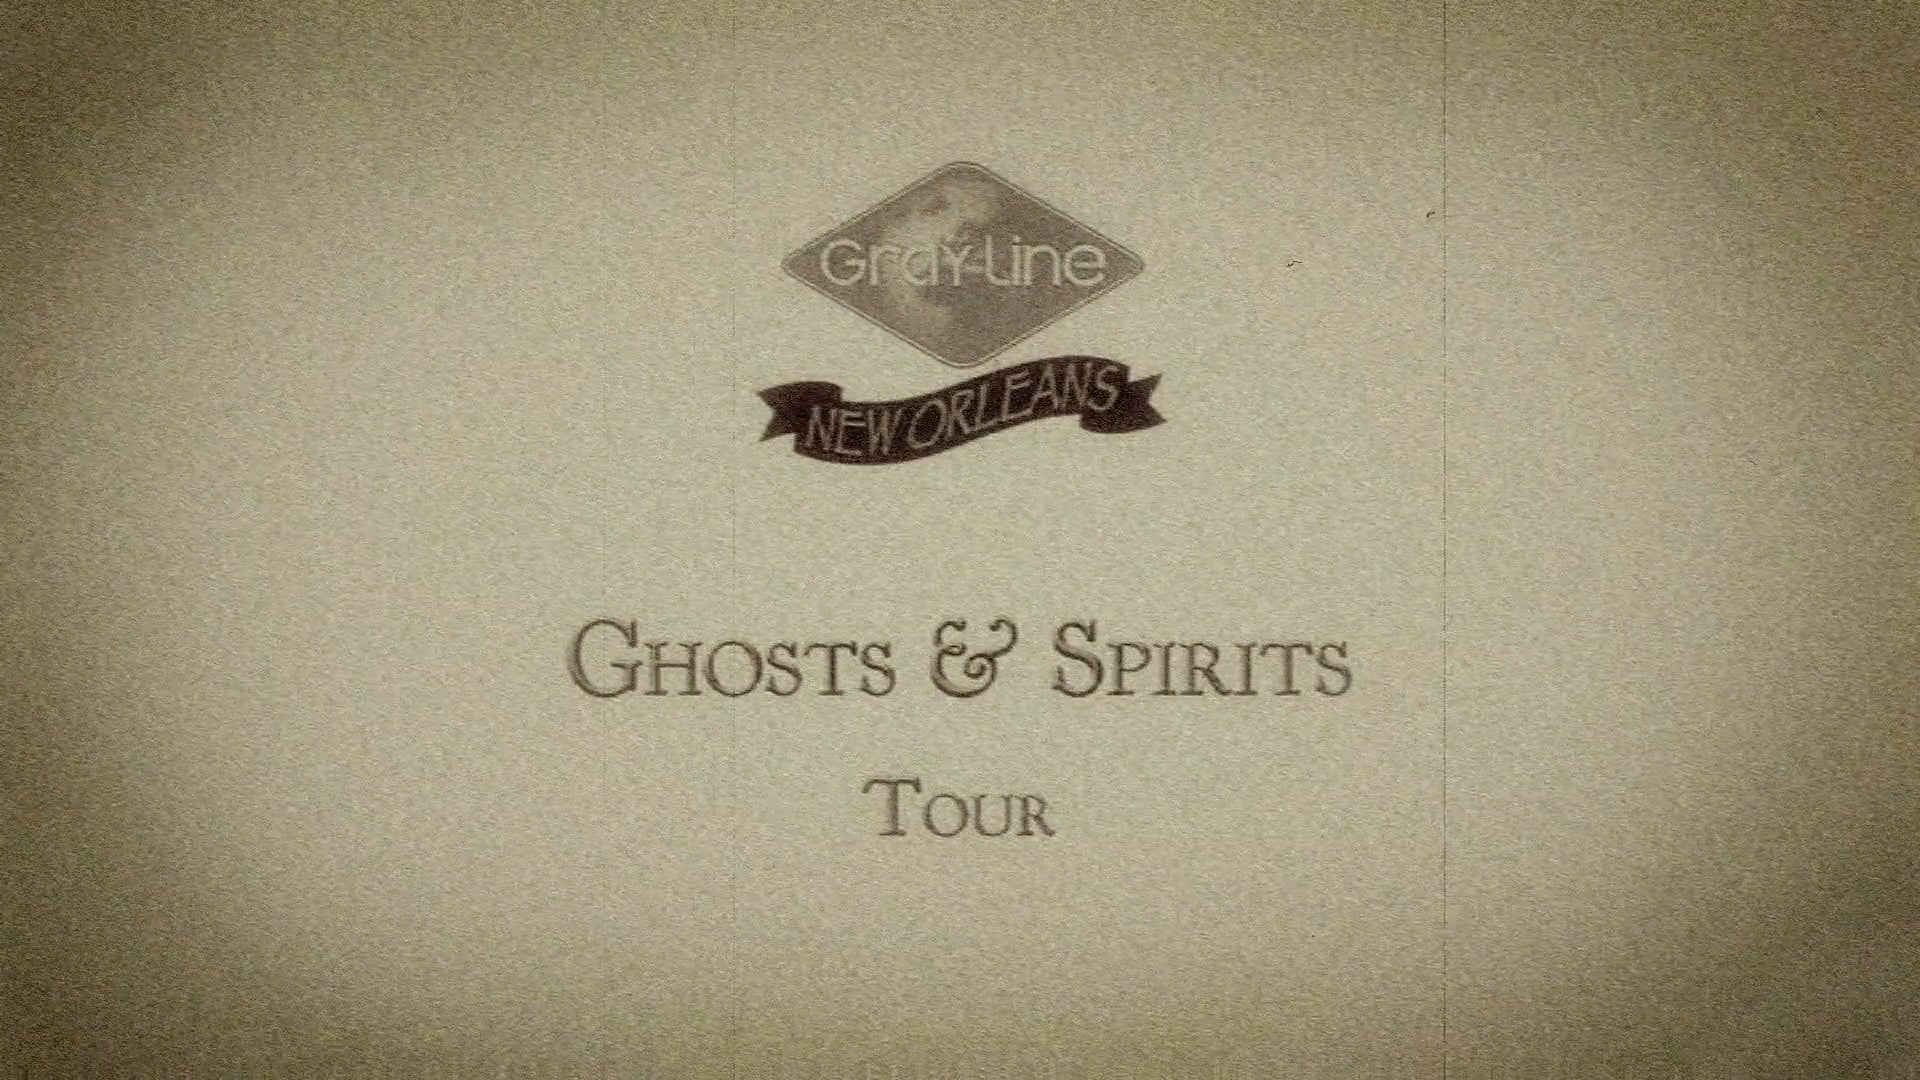 grayline ghost tour